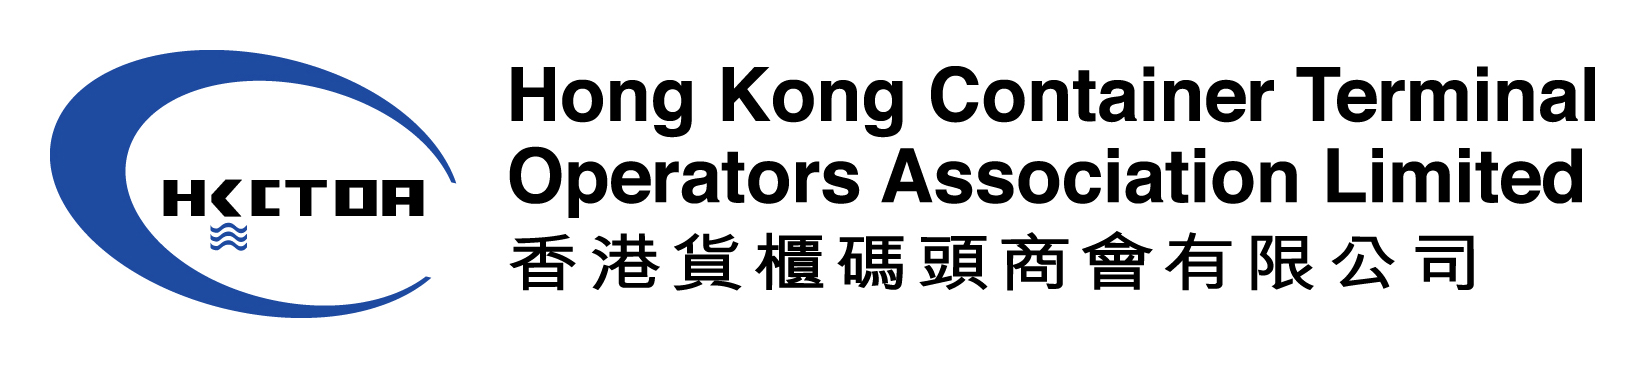 Hong Kong Container Terminal Operators Association